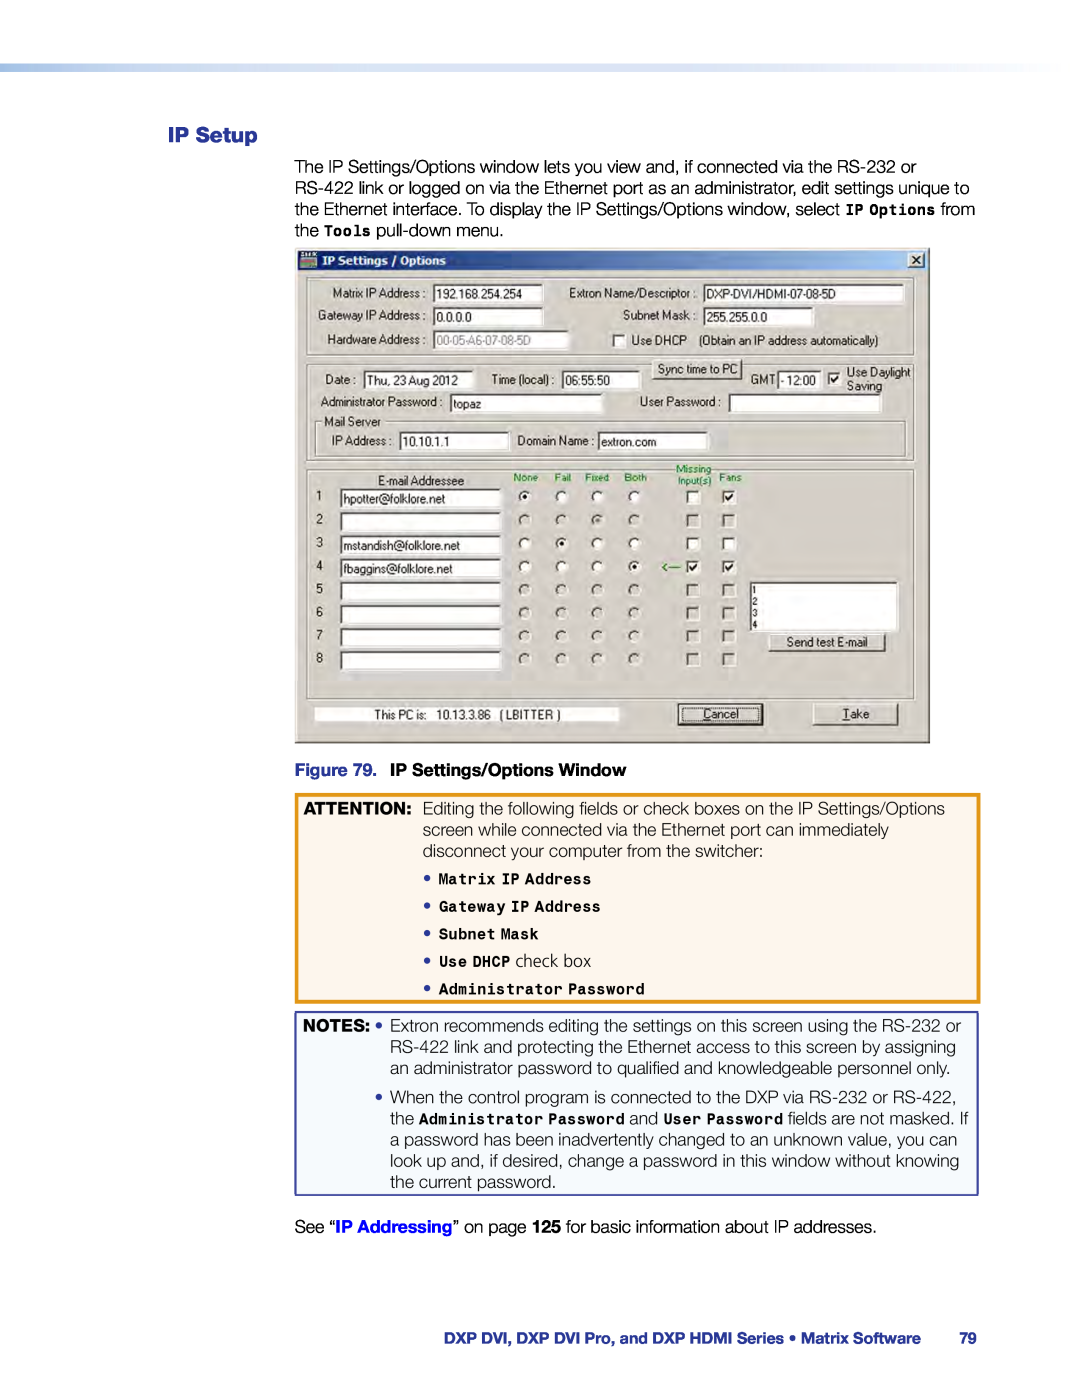 Extron electronic DXP DVI PRO manual IP Setup, IP Settings/Options Window 